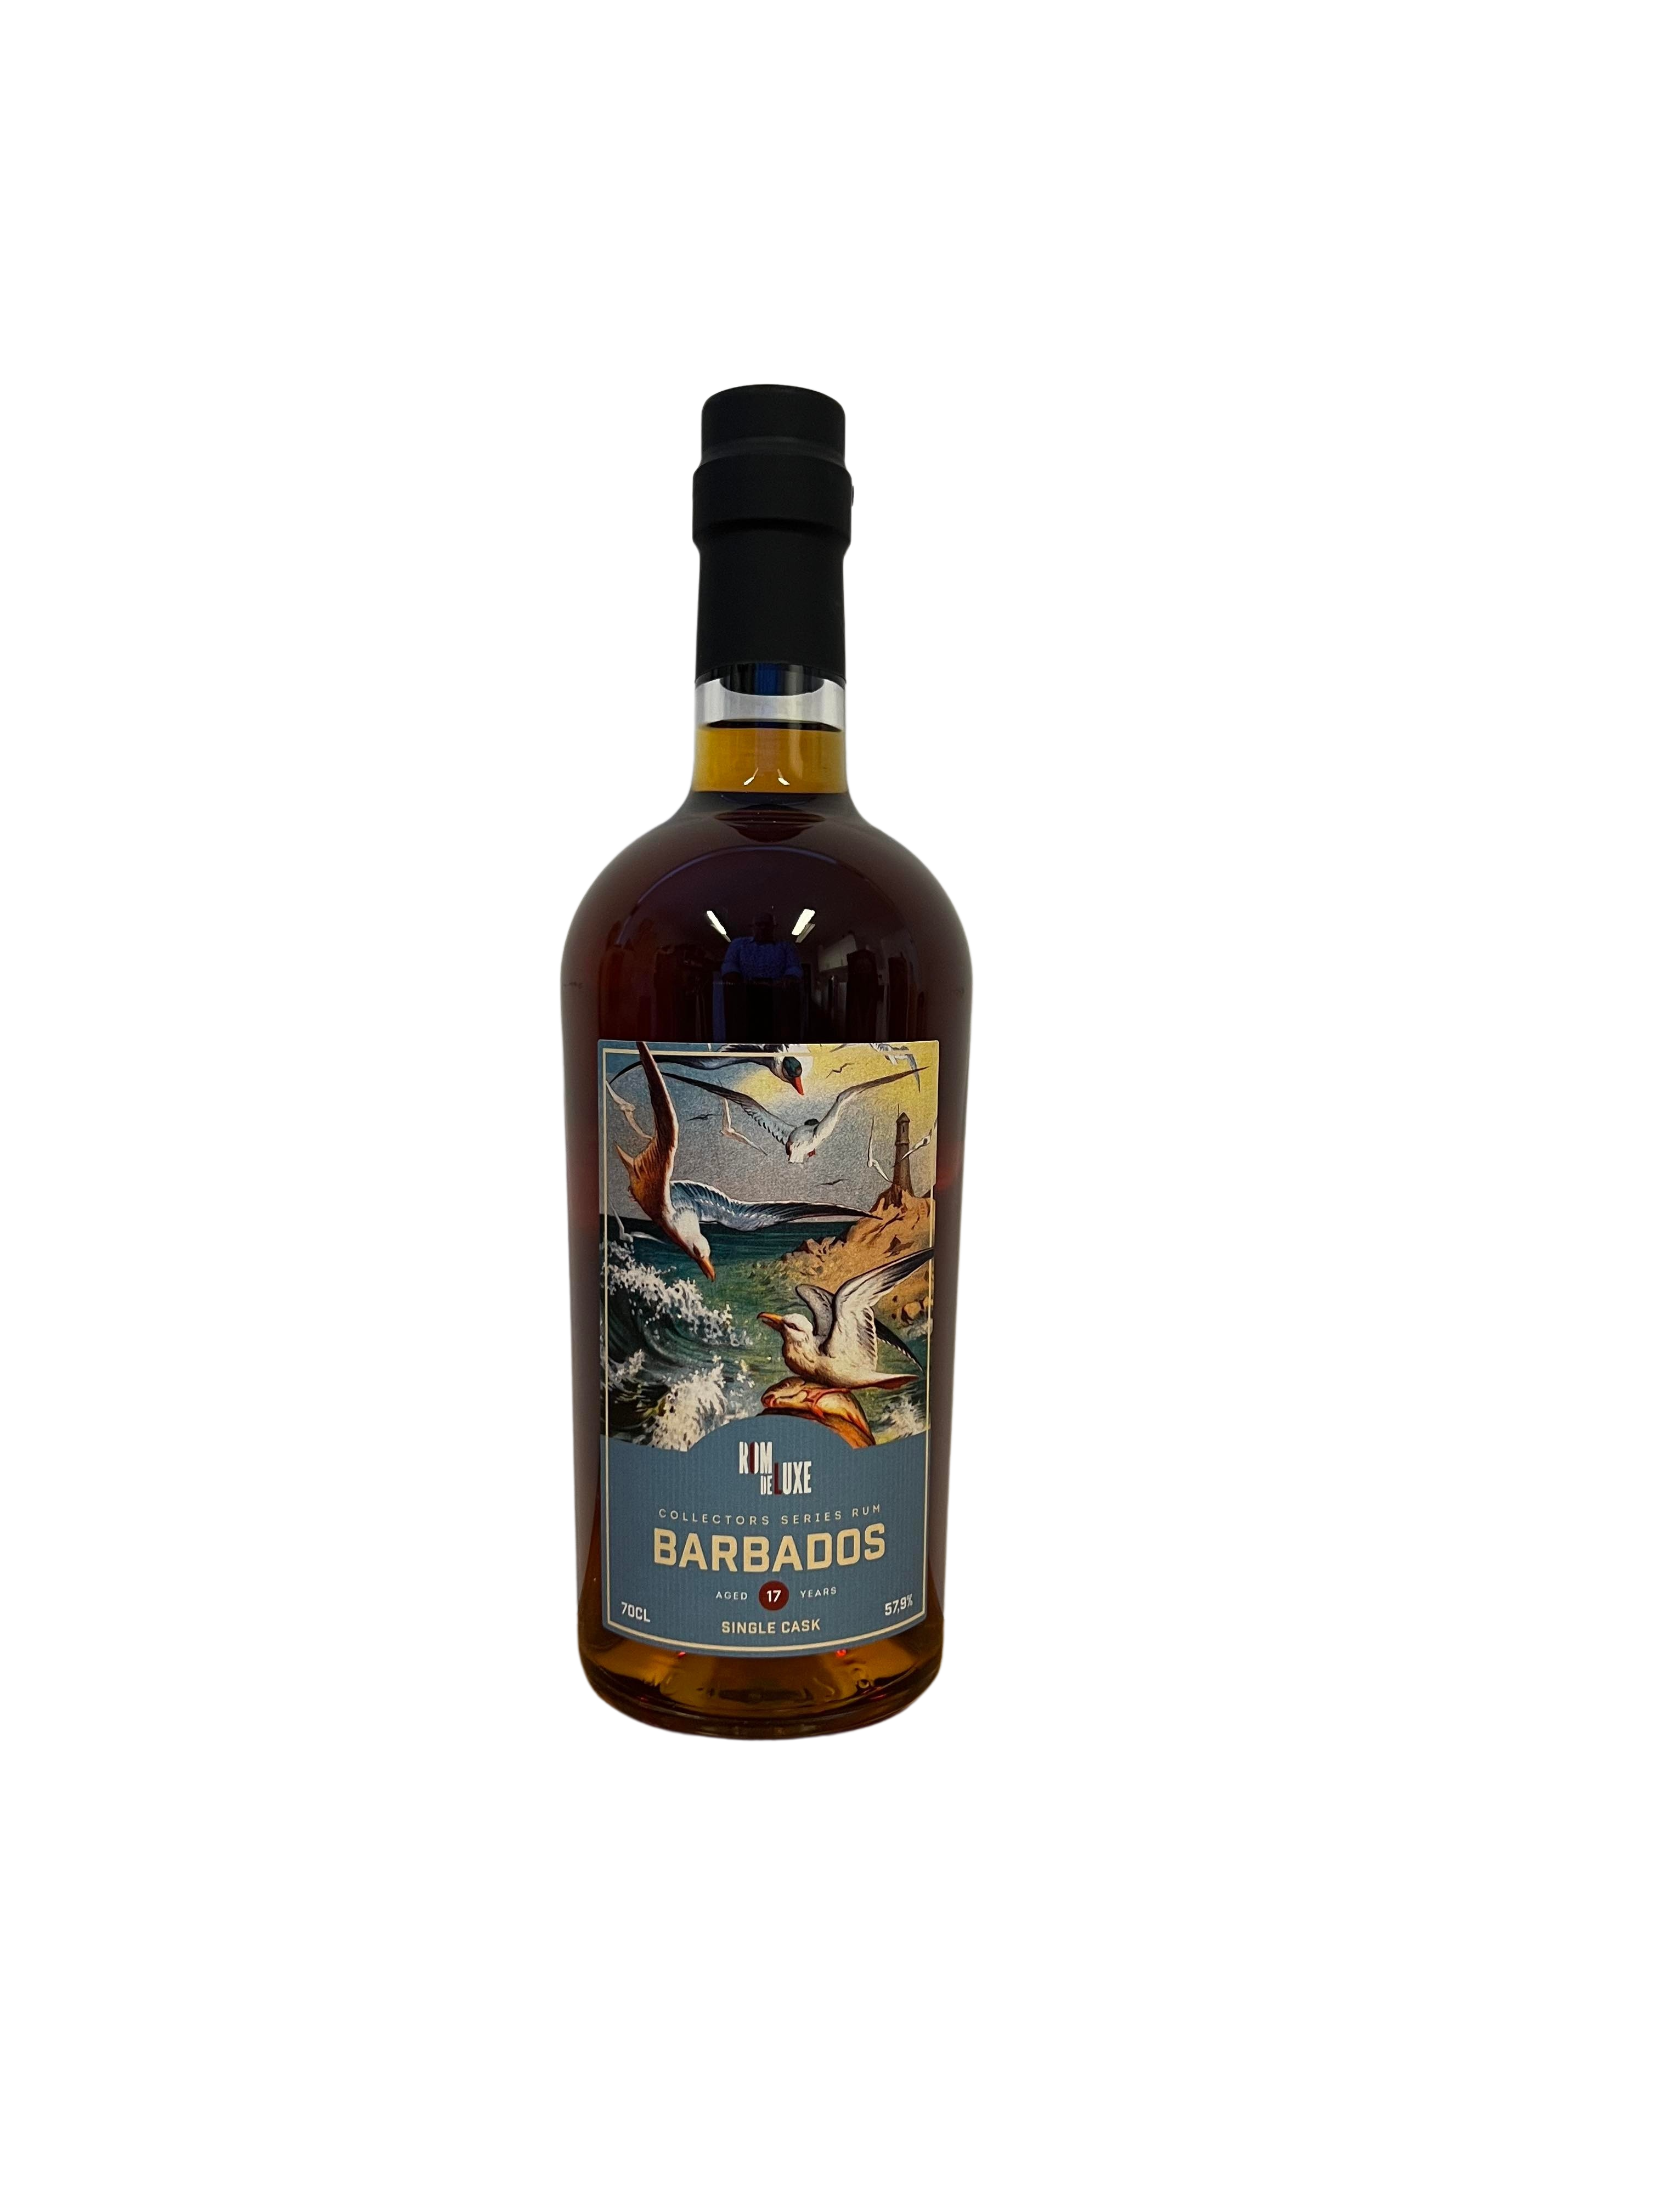 Collectors Series Rum n.14 Barbados 17yo - Edizione limitata